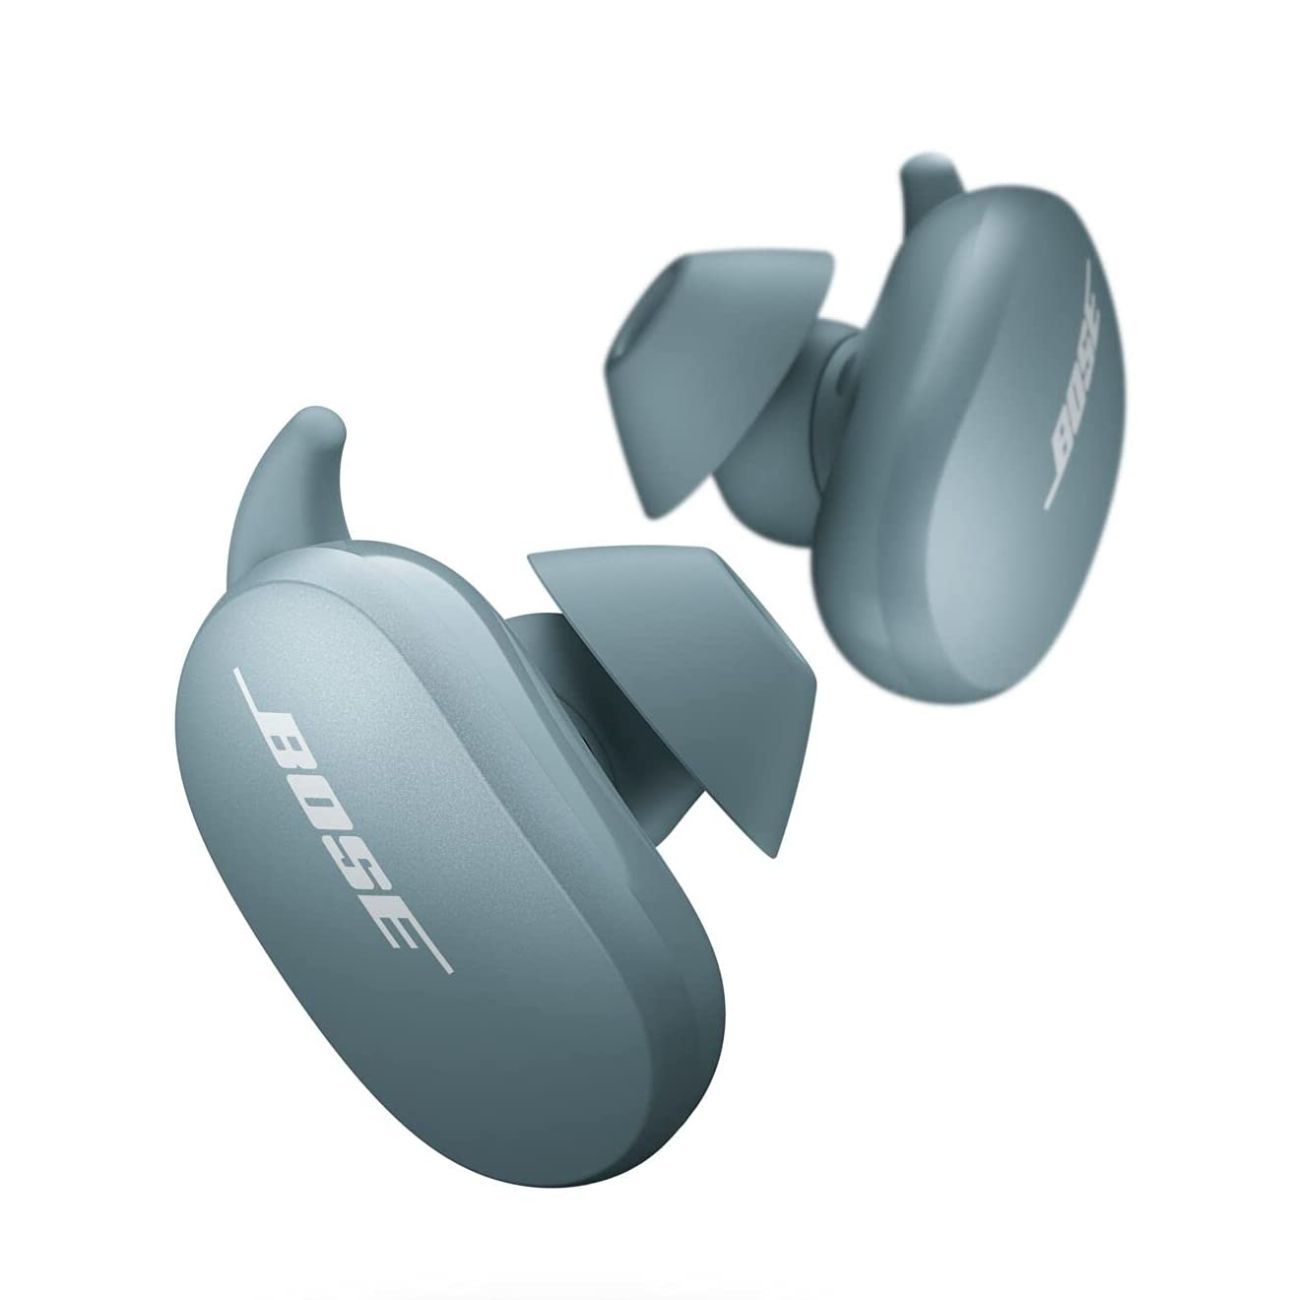 Bose QuietComfort Wireless Earbuds